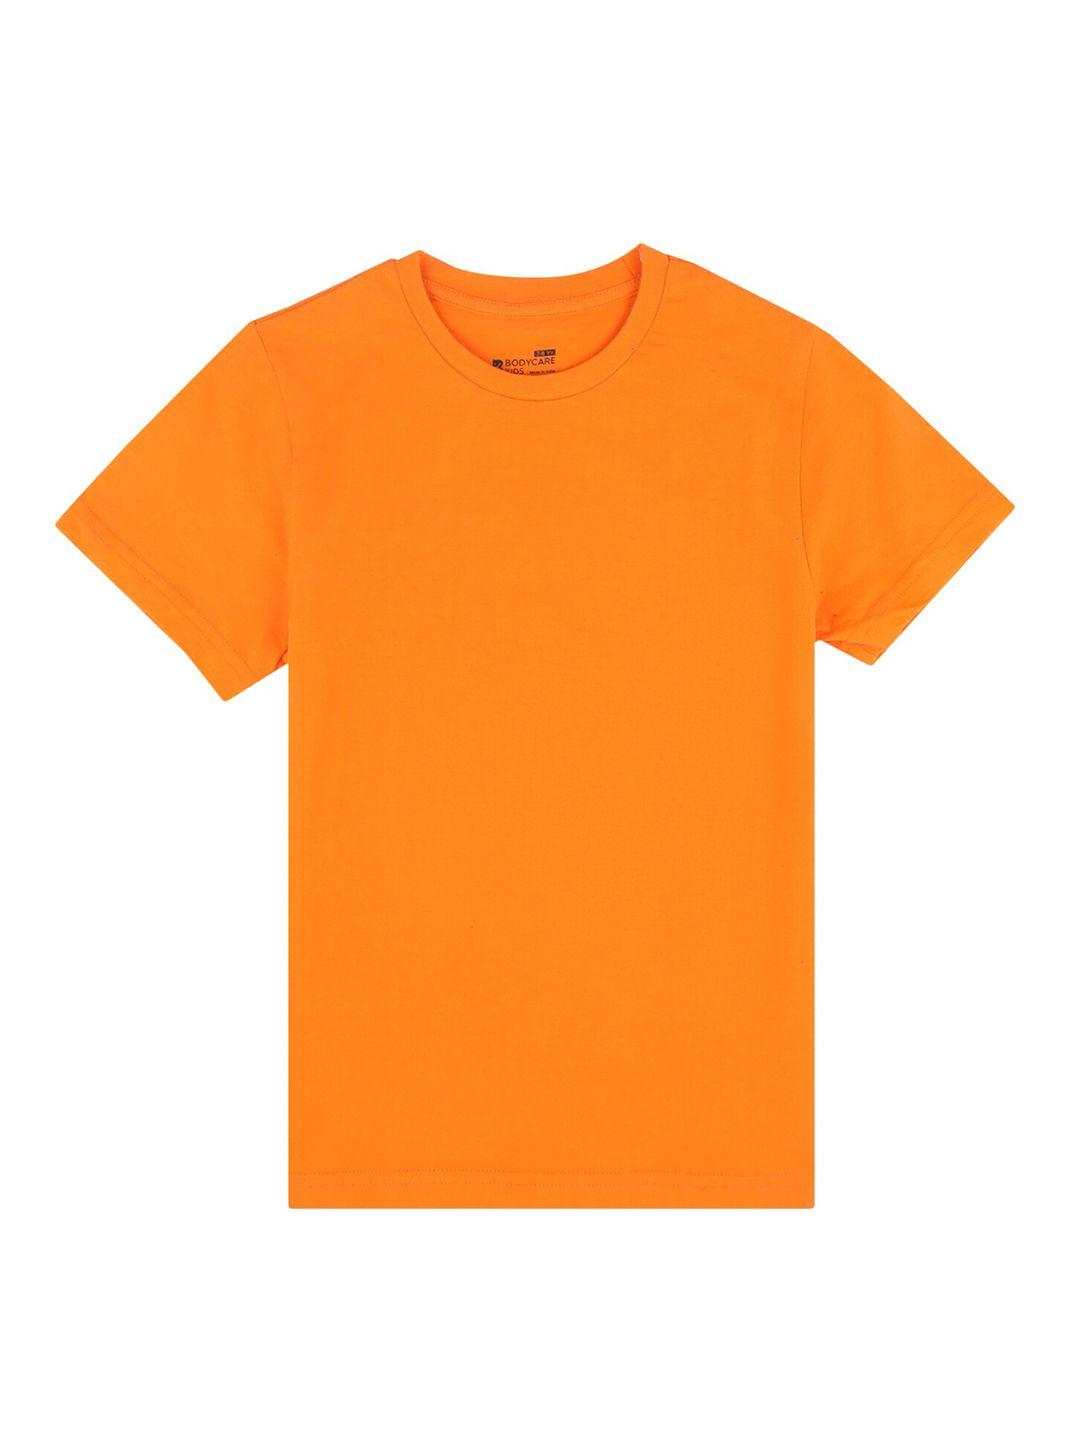 proteens boys orange half sleeves t-shirt